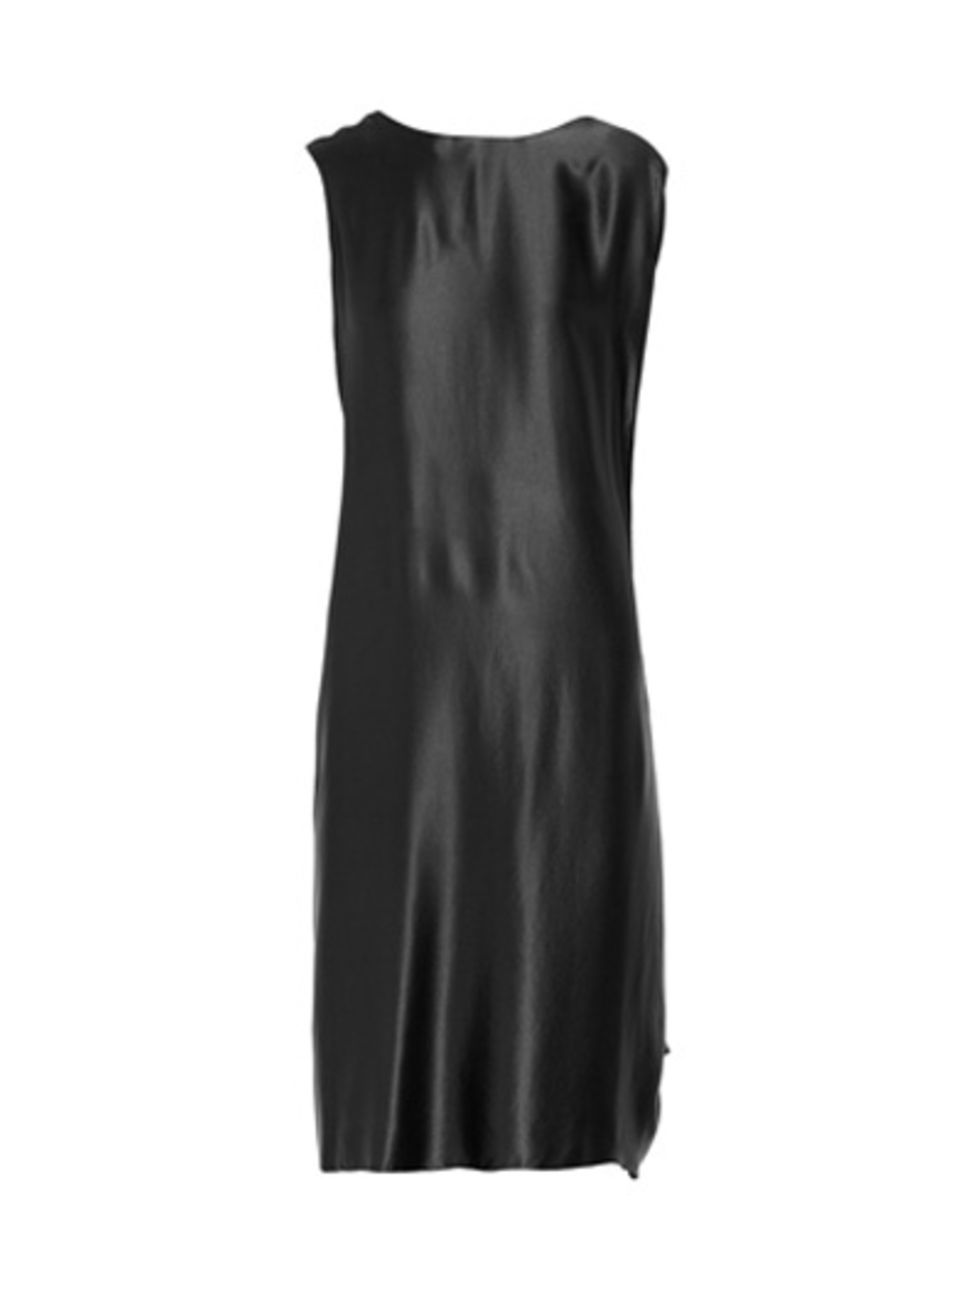 White, Dress, One-piece garment, Black, Day dress, Grey, Black-and-white, Cocktail dress, Monochrome photography, Sleeveless shirt, 